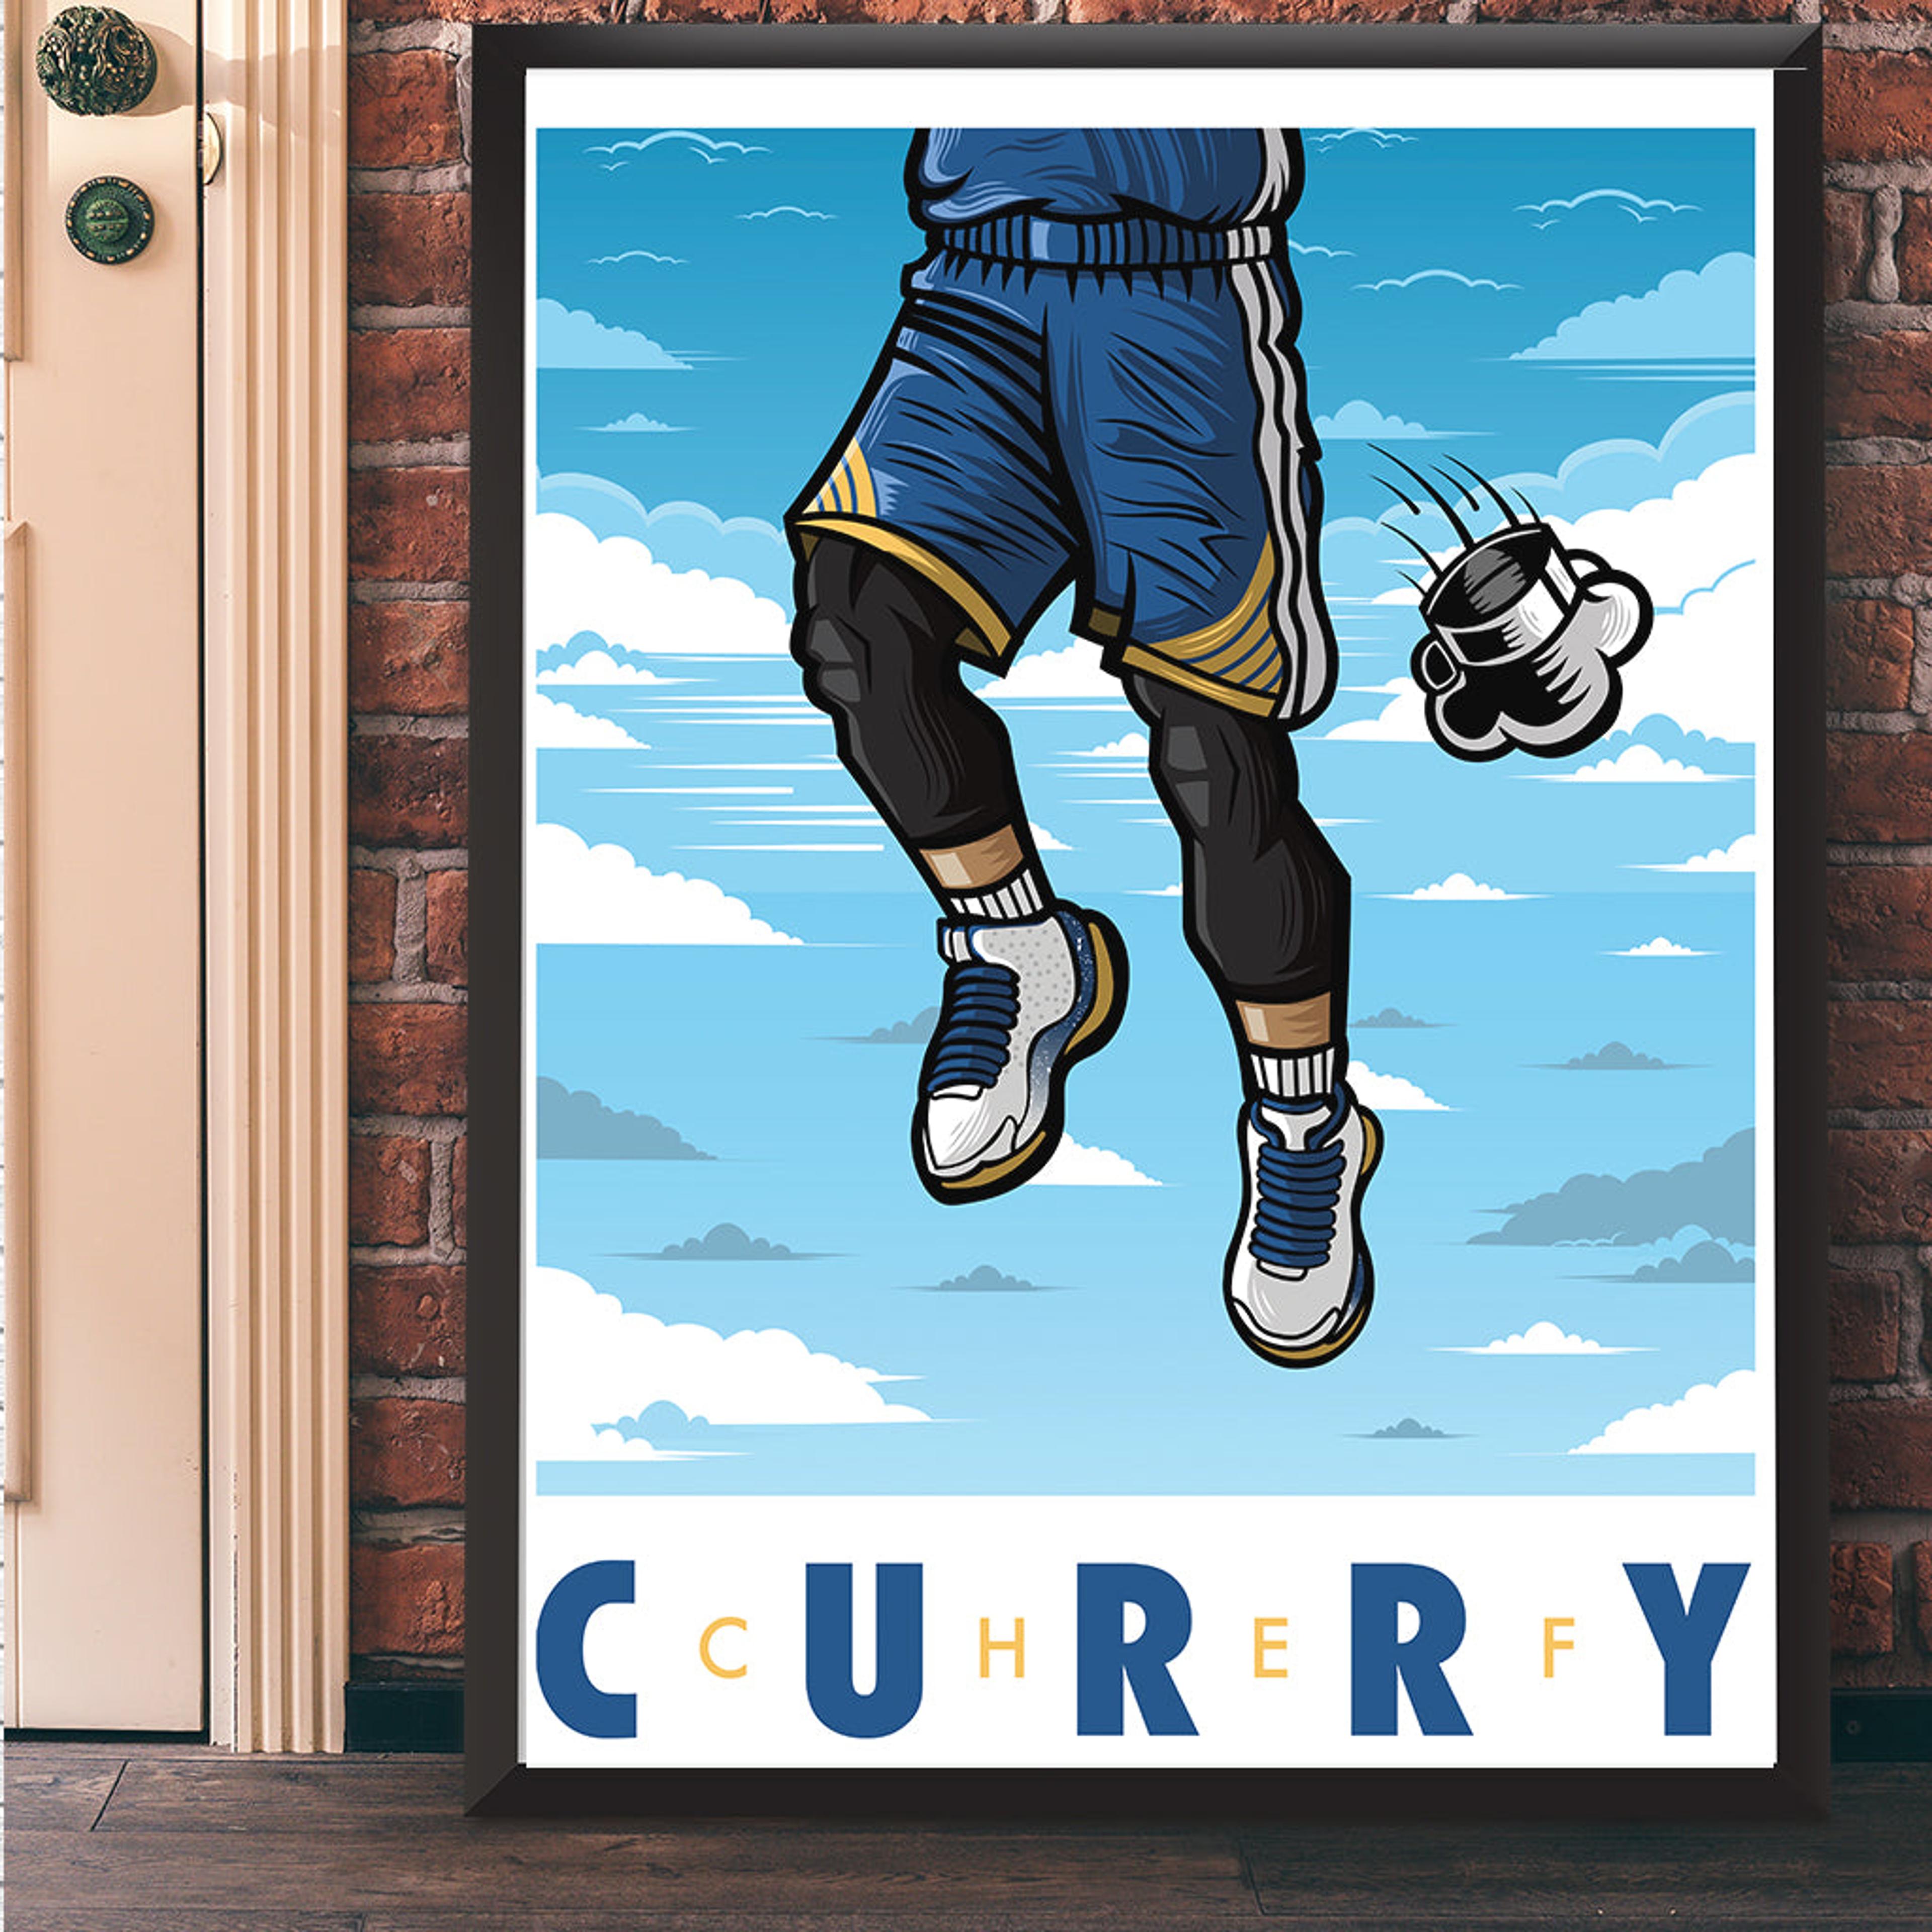 Chef Curry Giclee Art Print 17 x 22